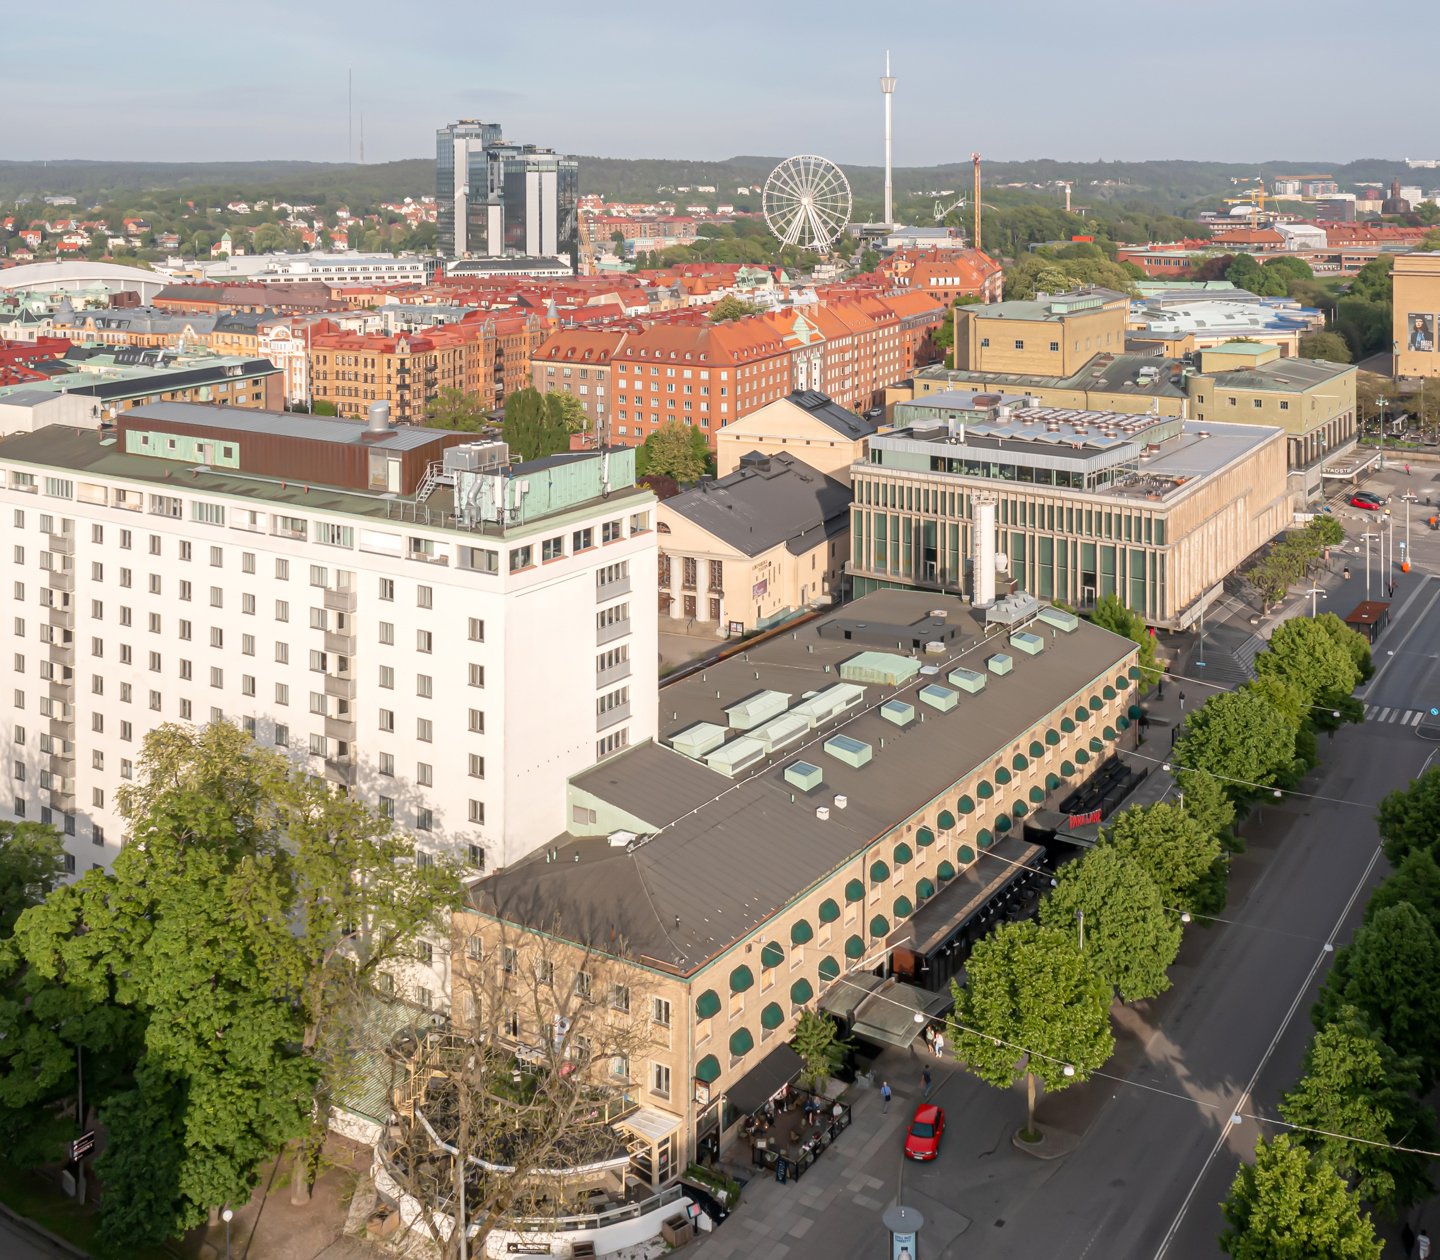 The facade of Elite Park Avenue Hotel in Göteborg